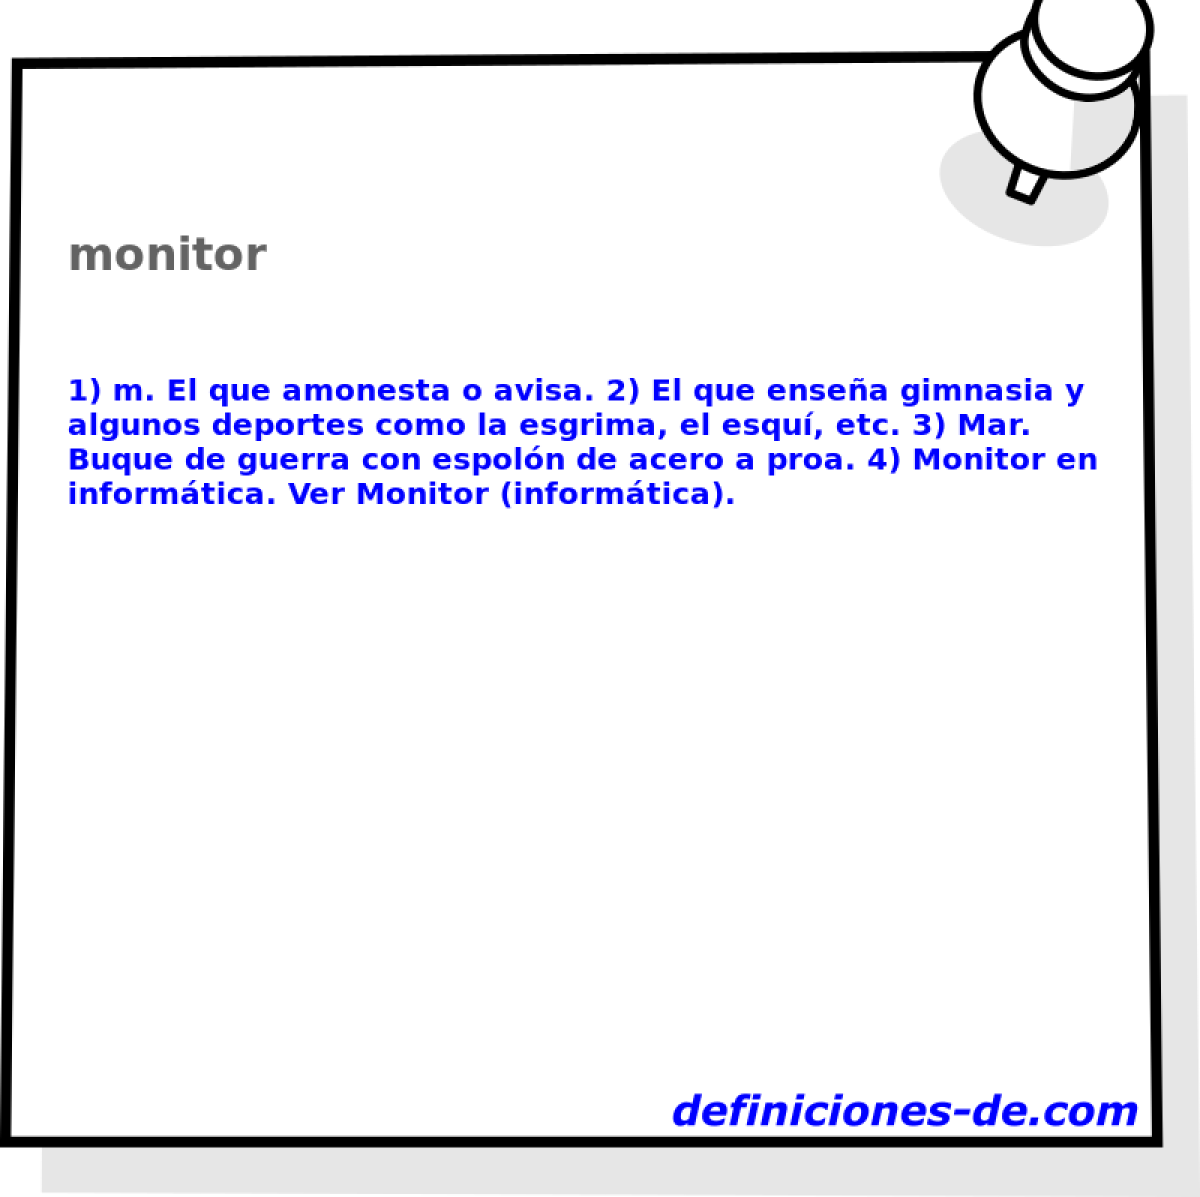 monitor 